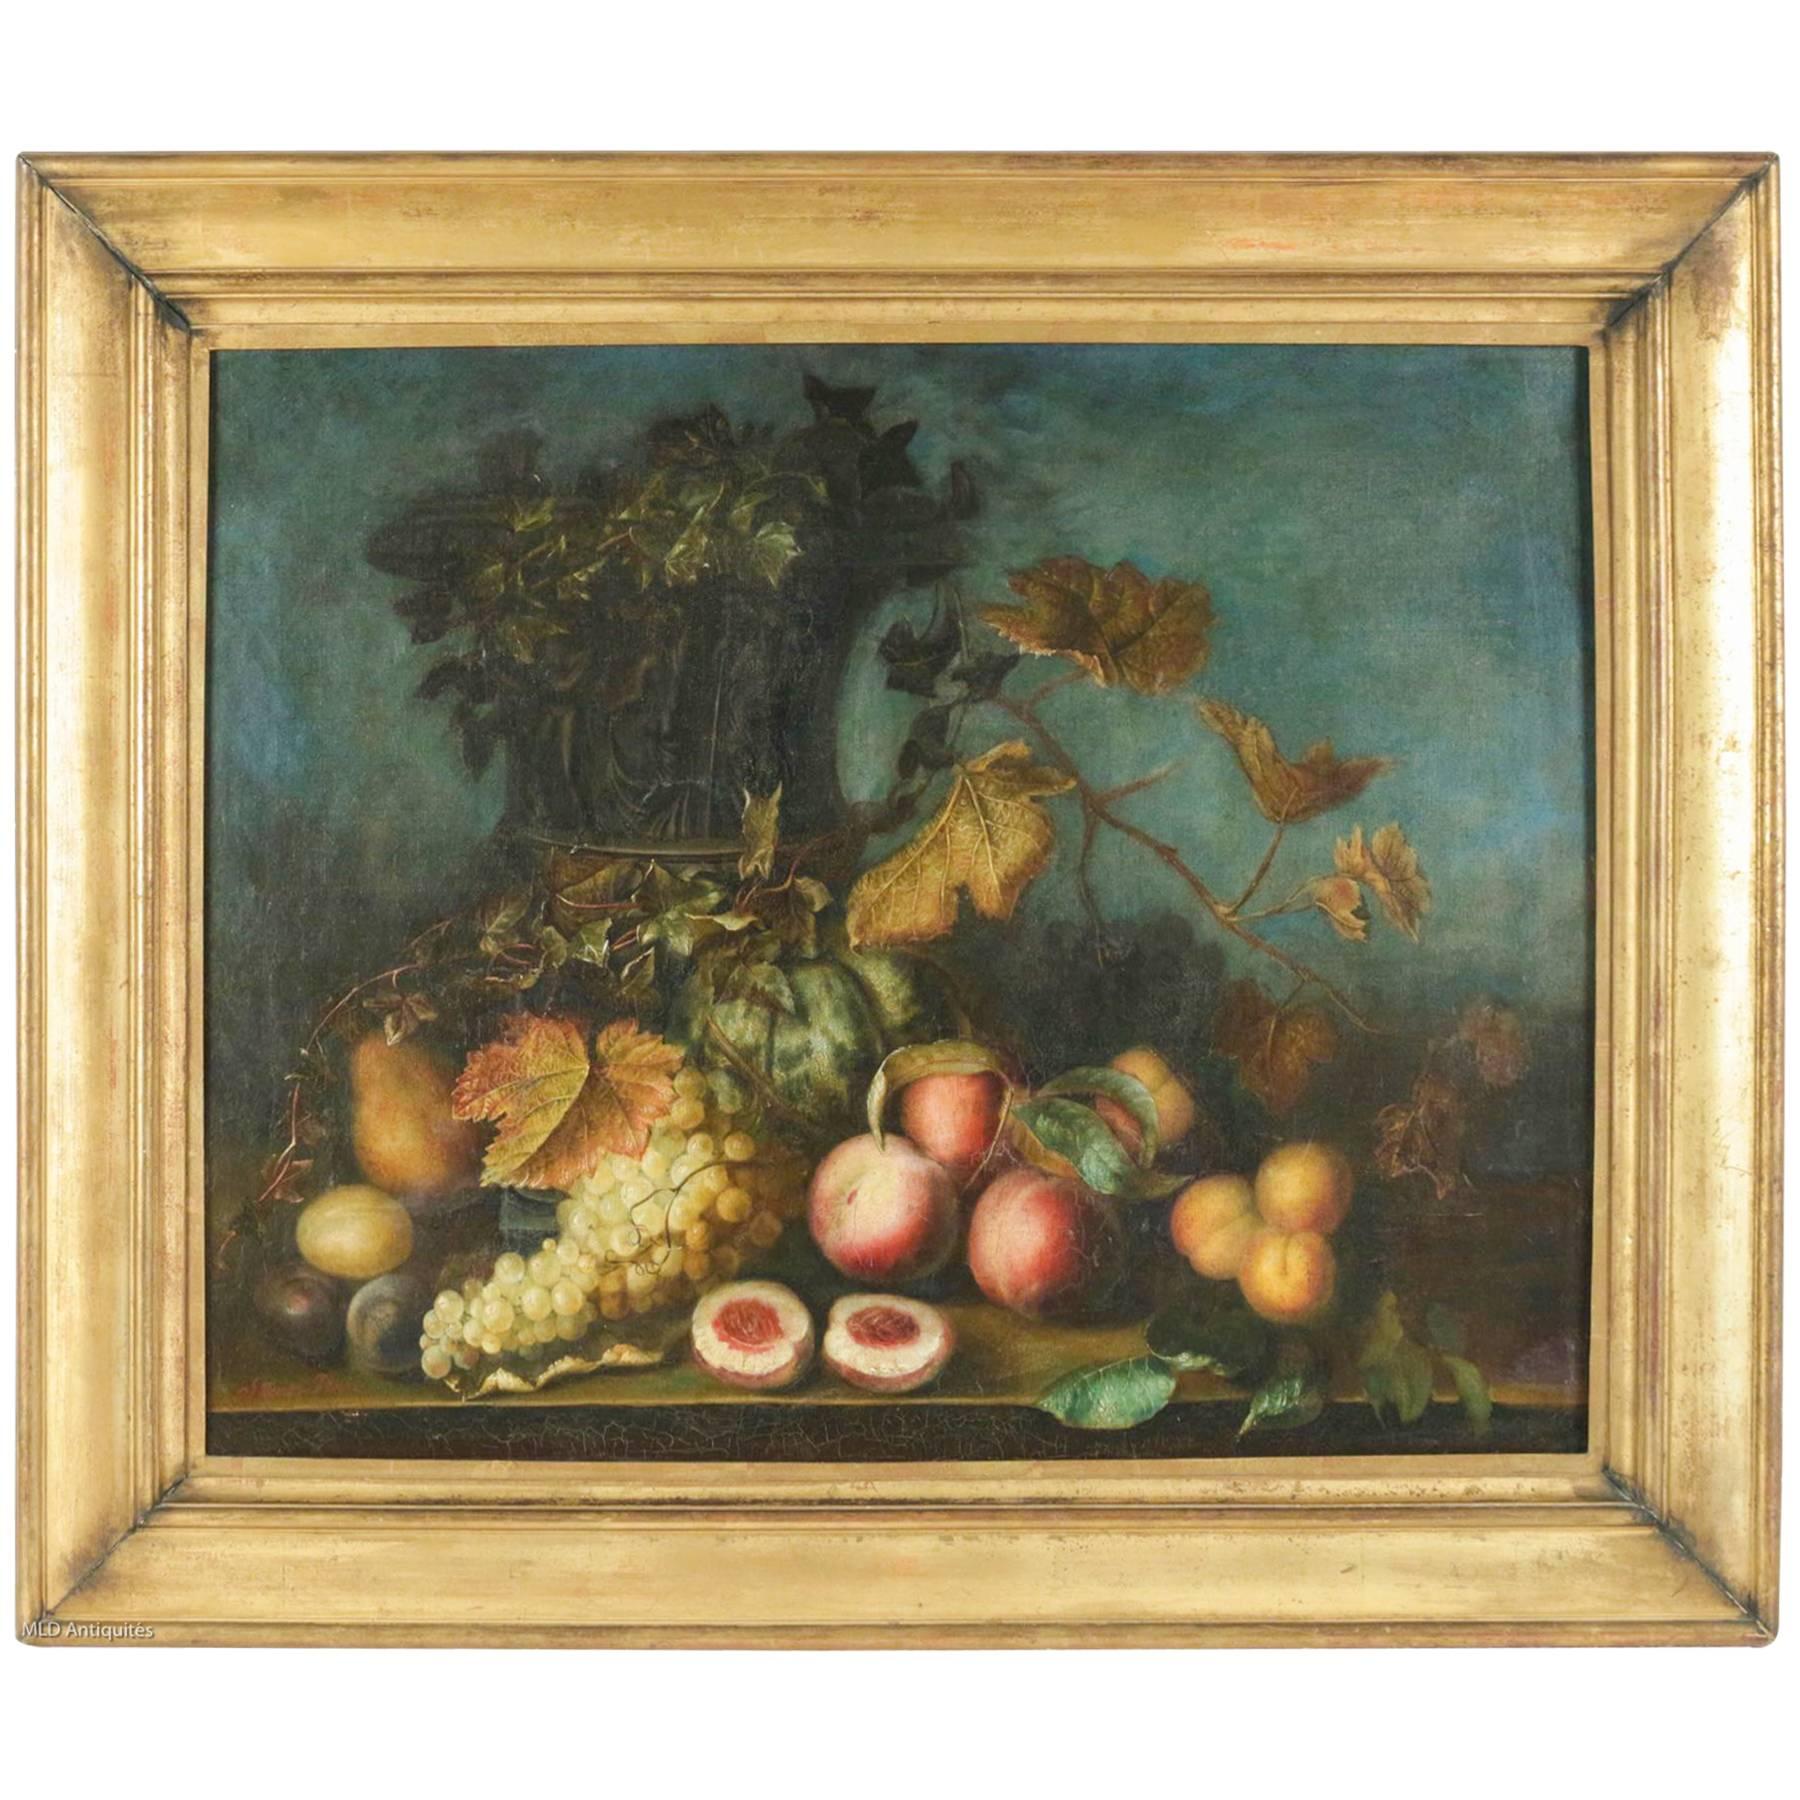 Simon Saint Jean Oil on Canvas Still Life with Fruits, circa 1830-1840